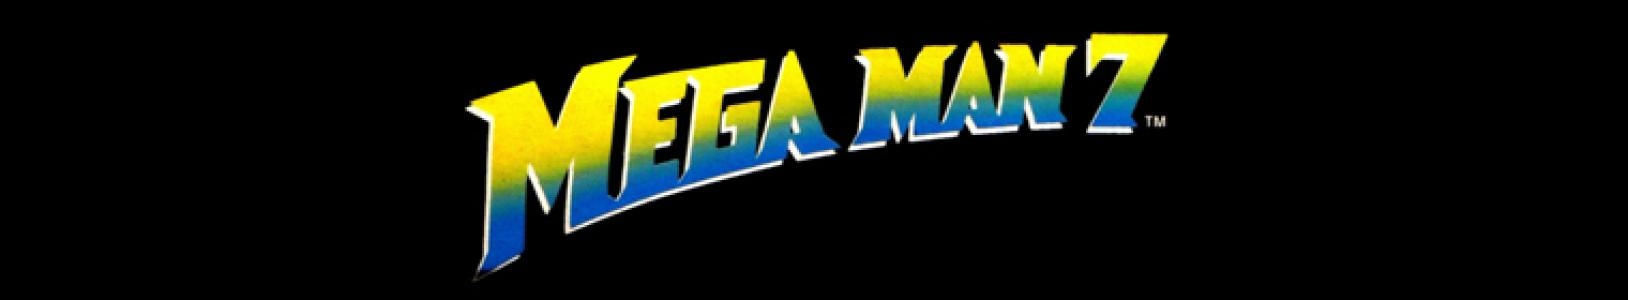 Mega Man 7 banner